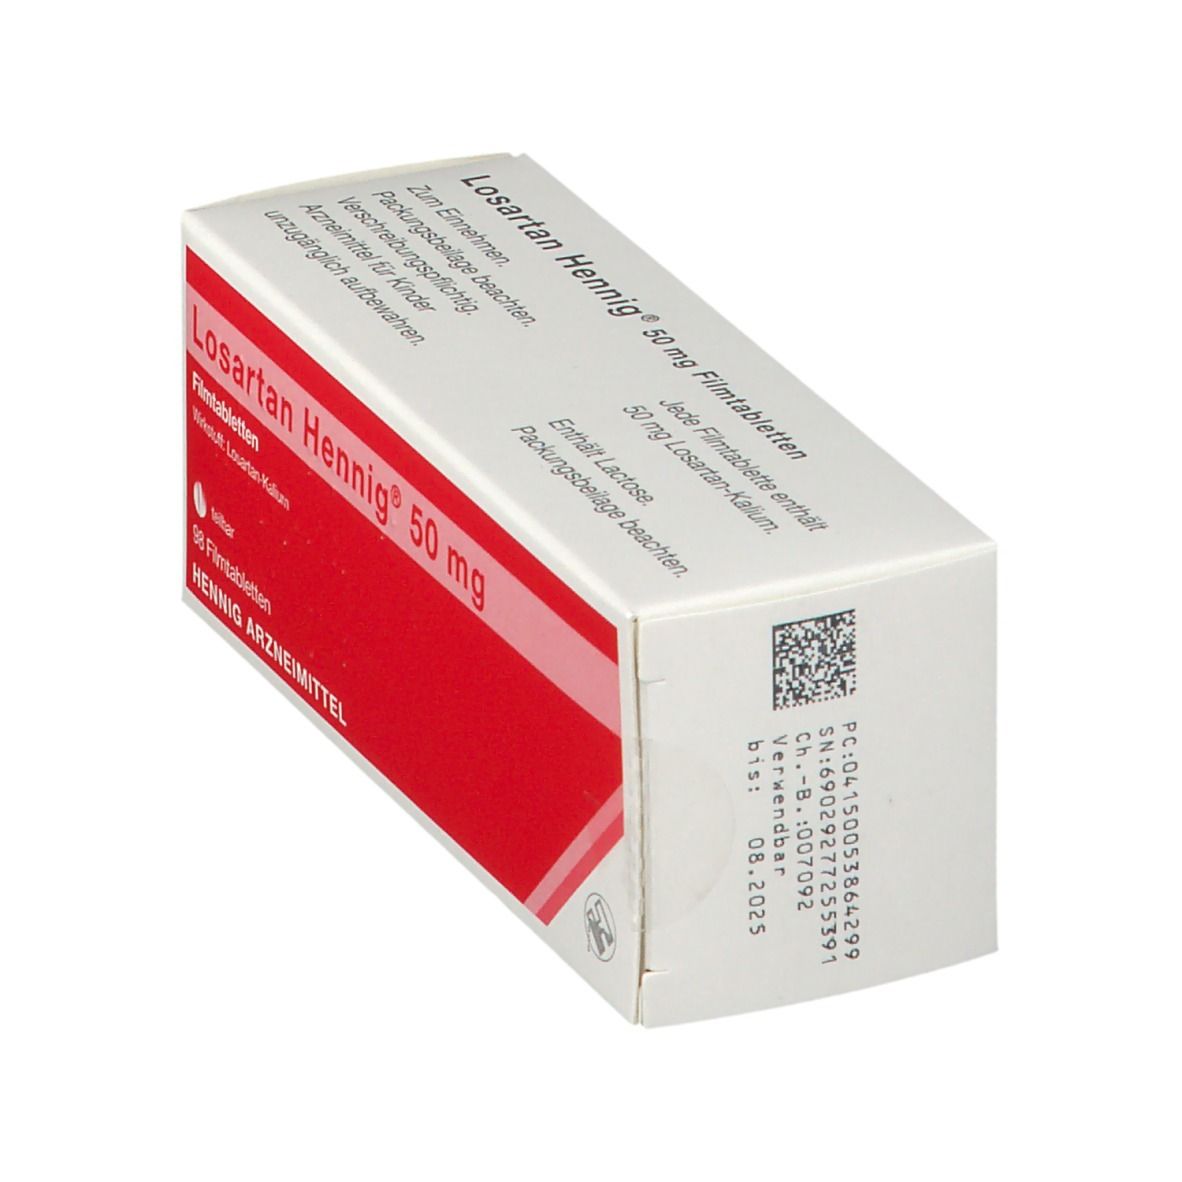 Losartan Hennig® 50 mg